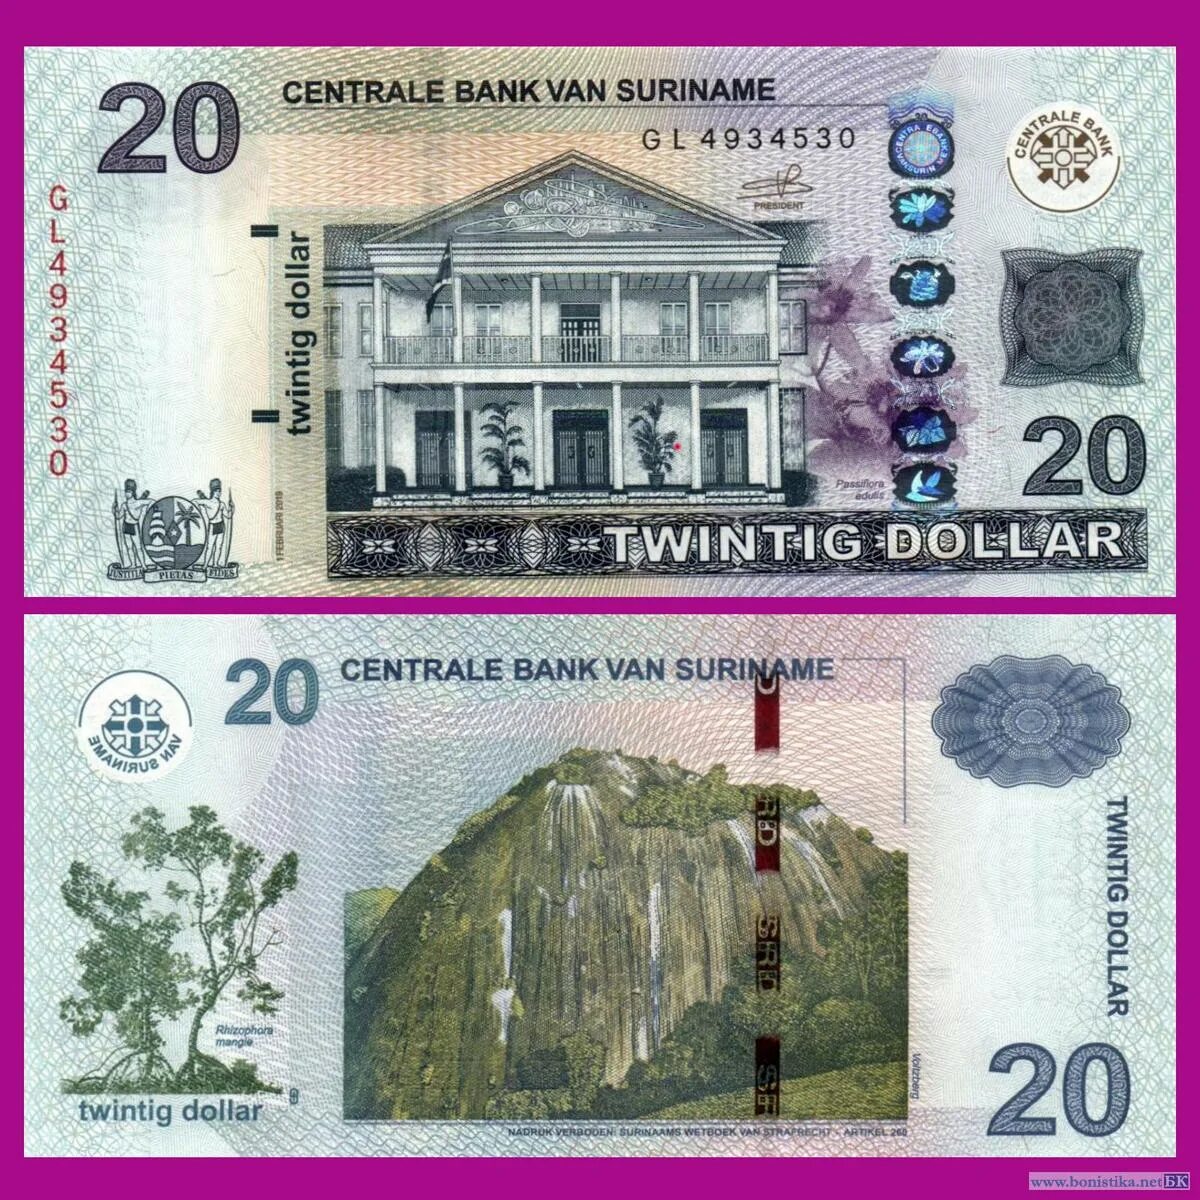 Тираж купюры. Суринамский доллар. Centrale Bank van Suriname. 5 Centrale Bank van Suriname. Тираж банкноты 5.